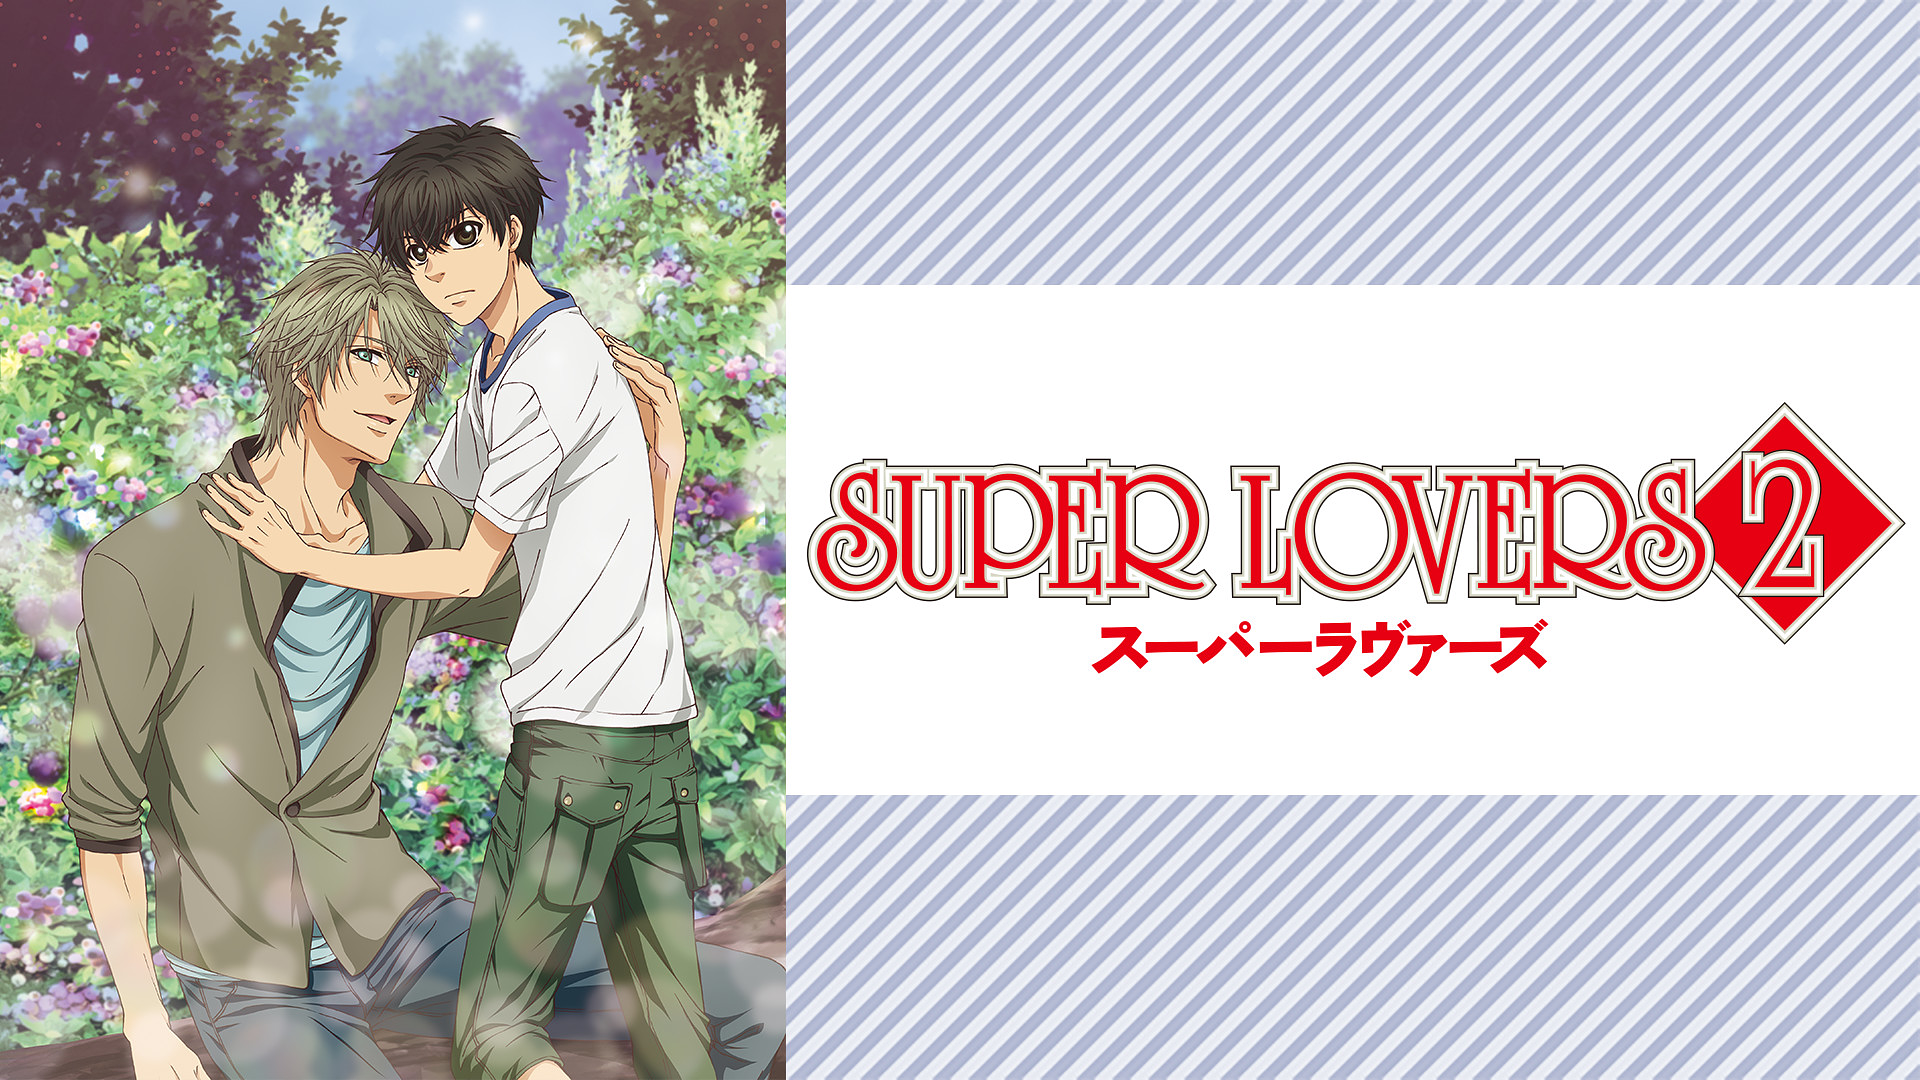 Super Lovers 2 アニメ動画見放題 Dアニメストア